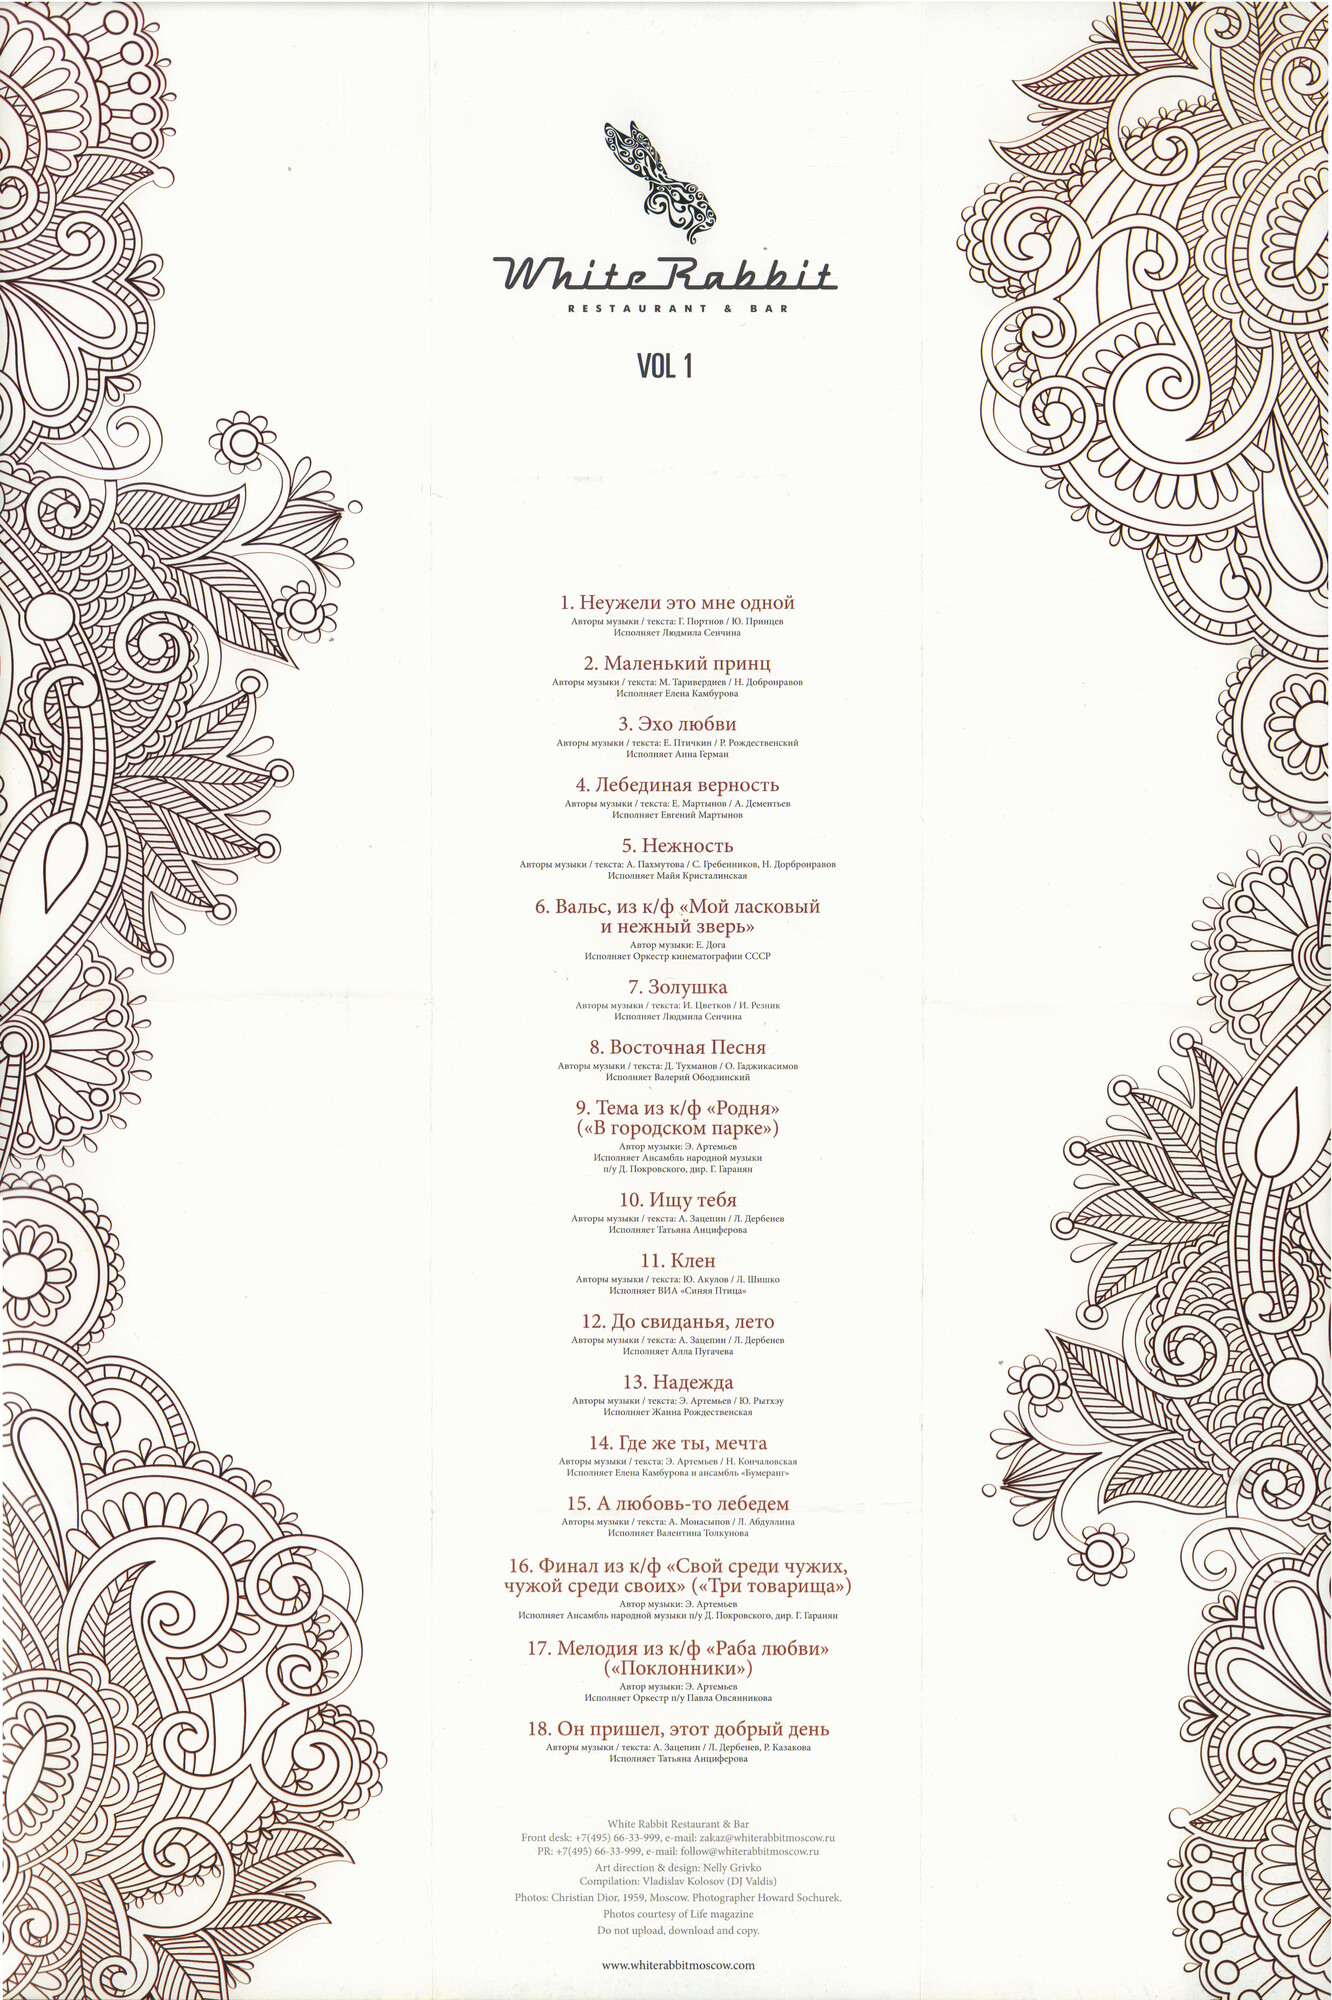 White Rabbit. Restaurant & Bar. Vol. 1 (промо-диск)